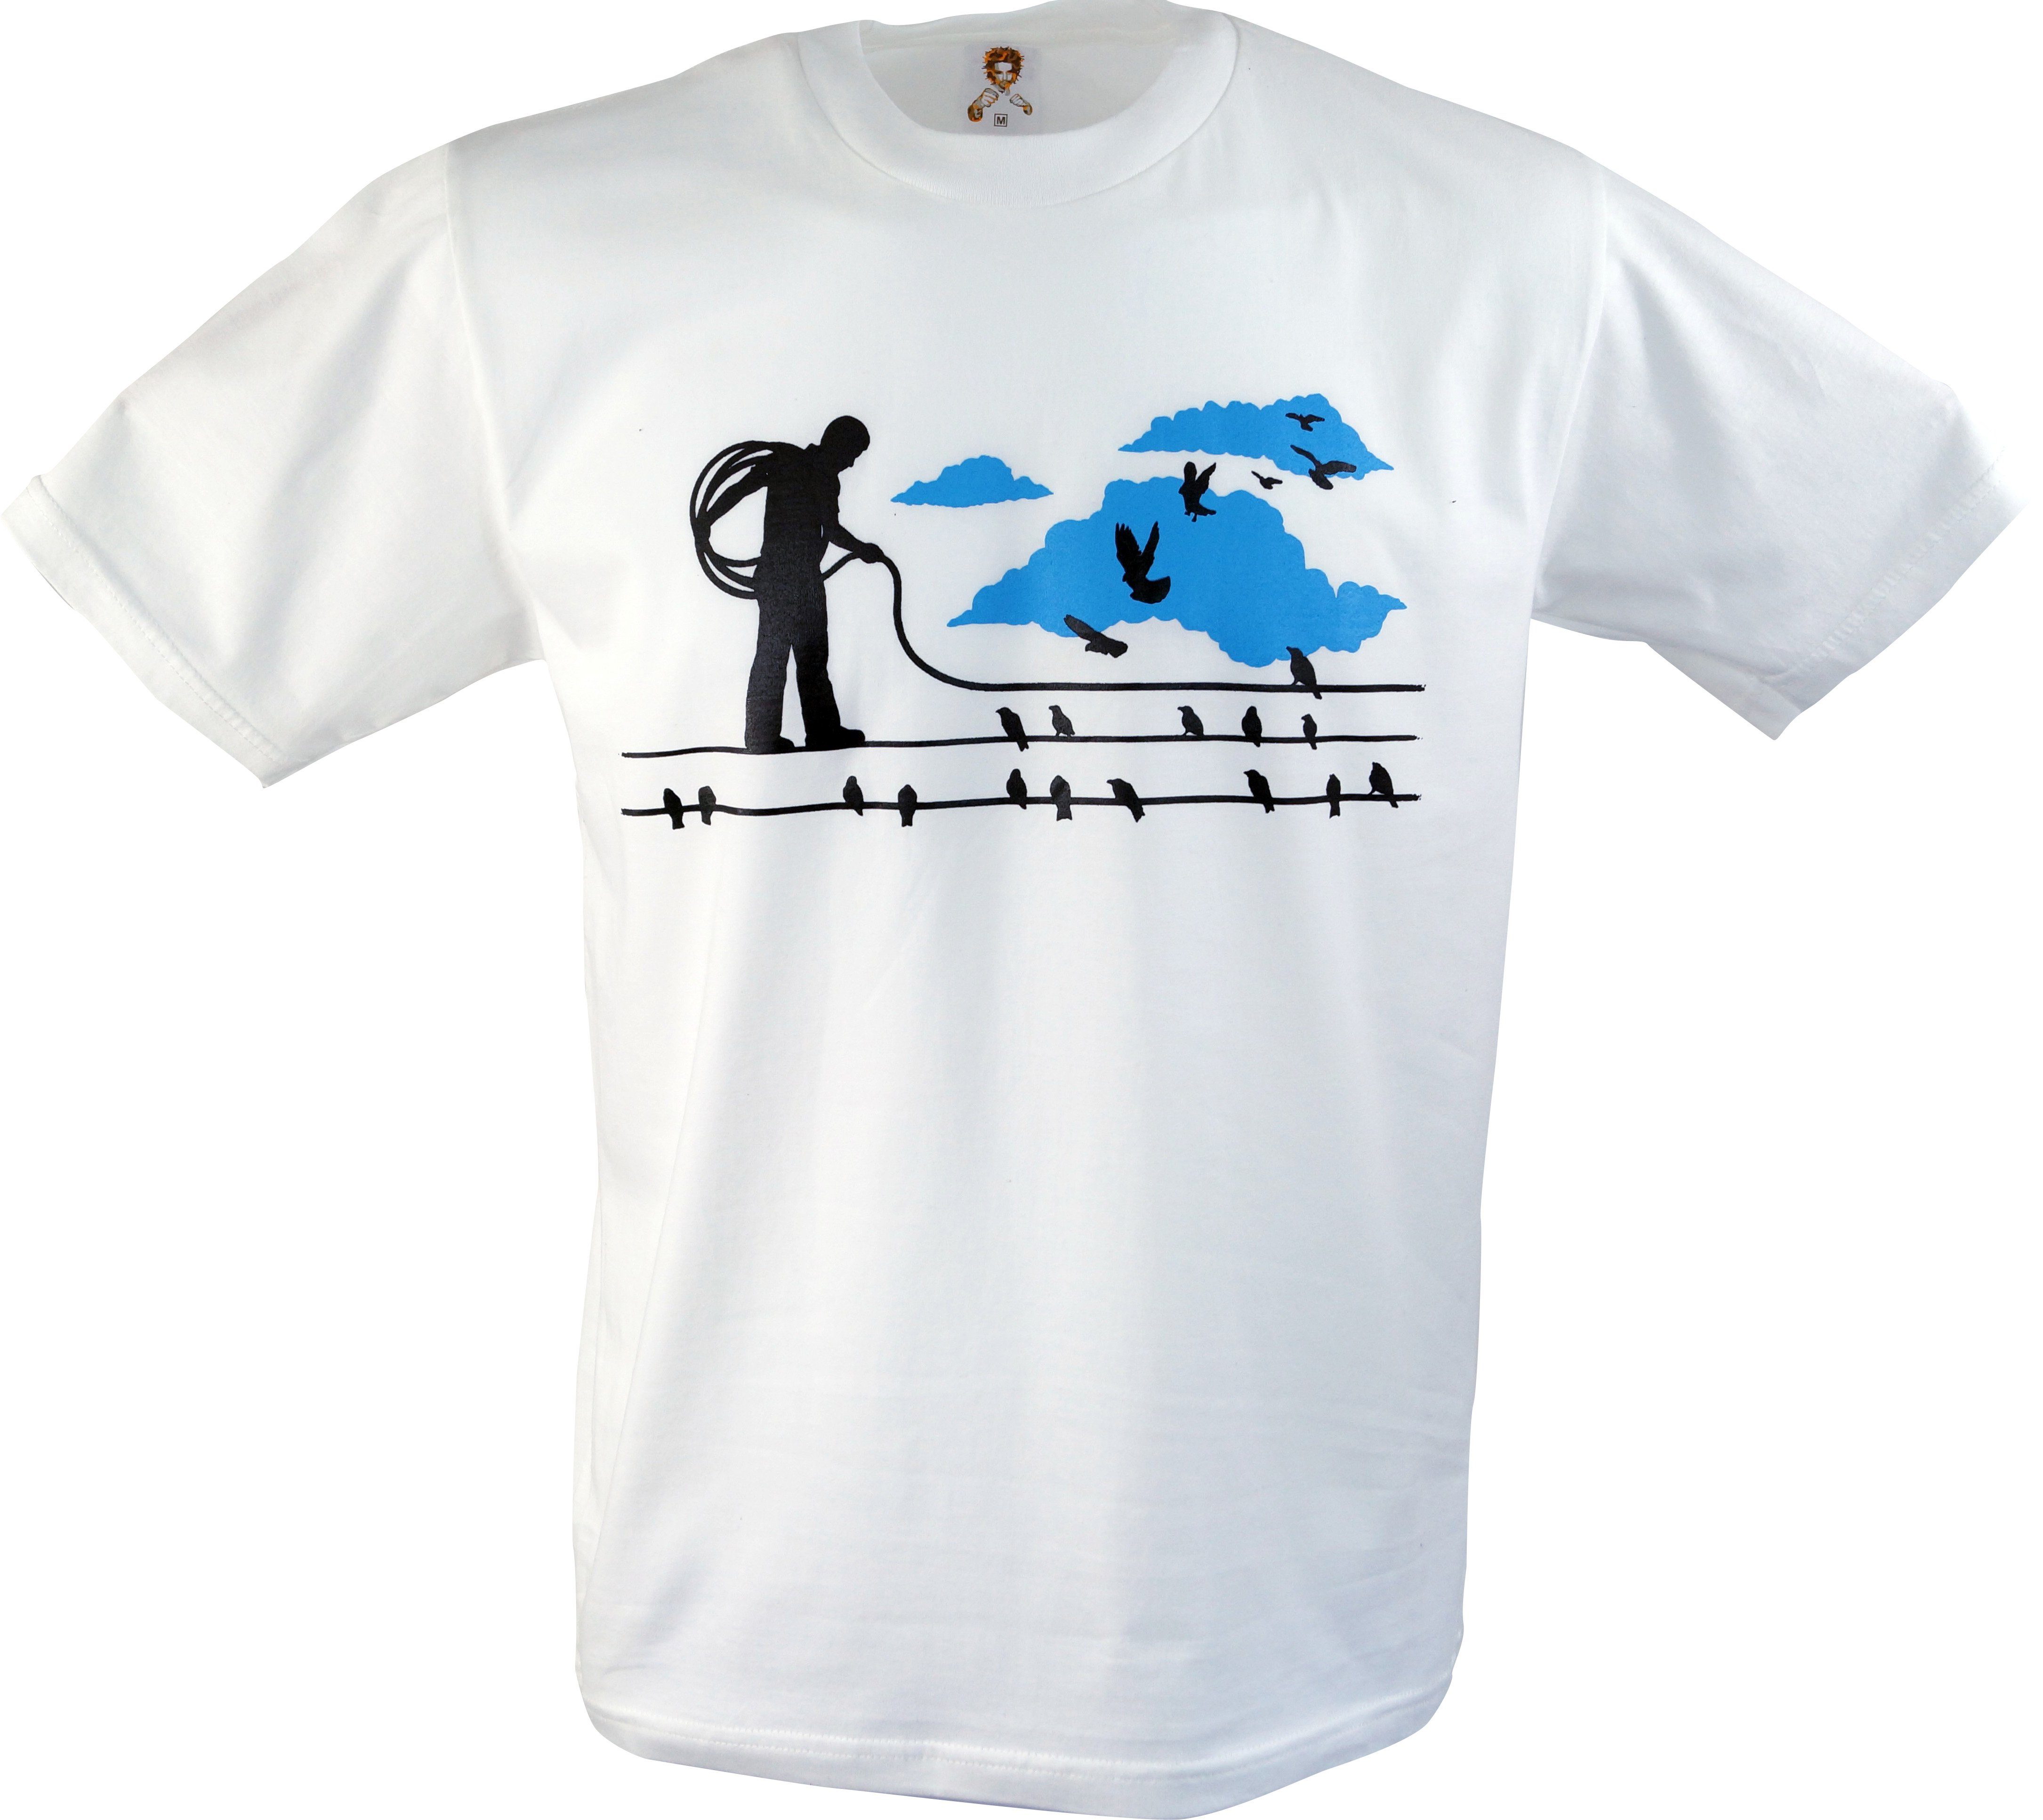 Guru-Shop T-Shirt Retro Abflug alternative T-Shirt Fun Art - Bekleidung